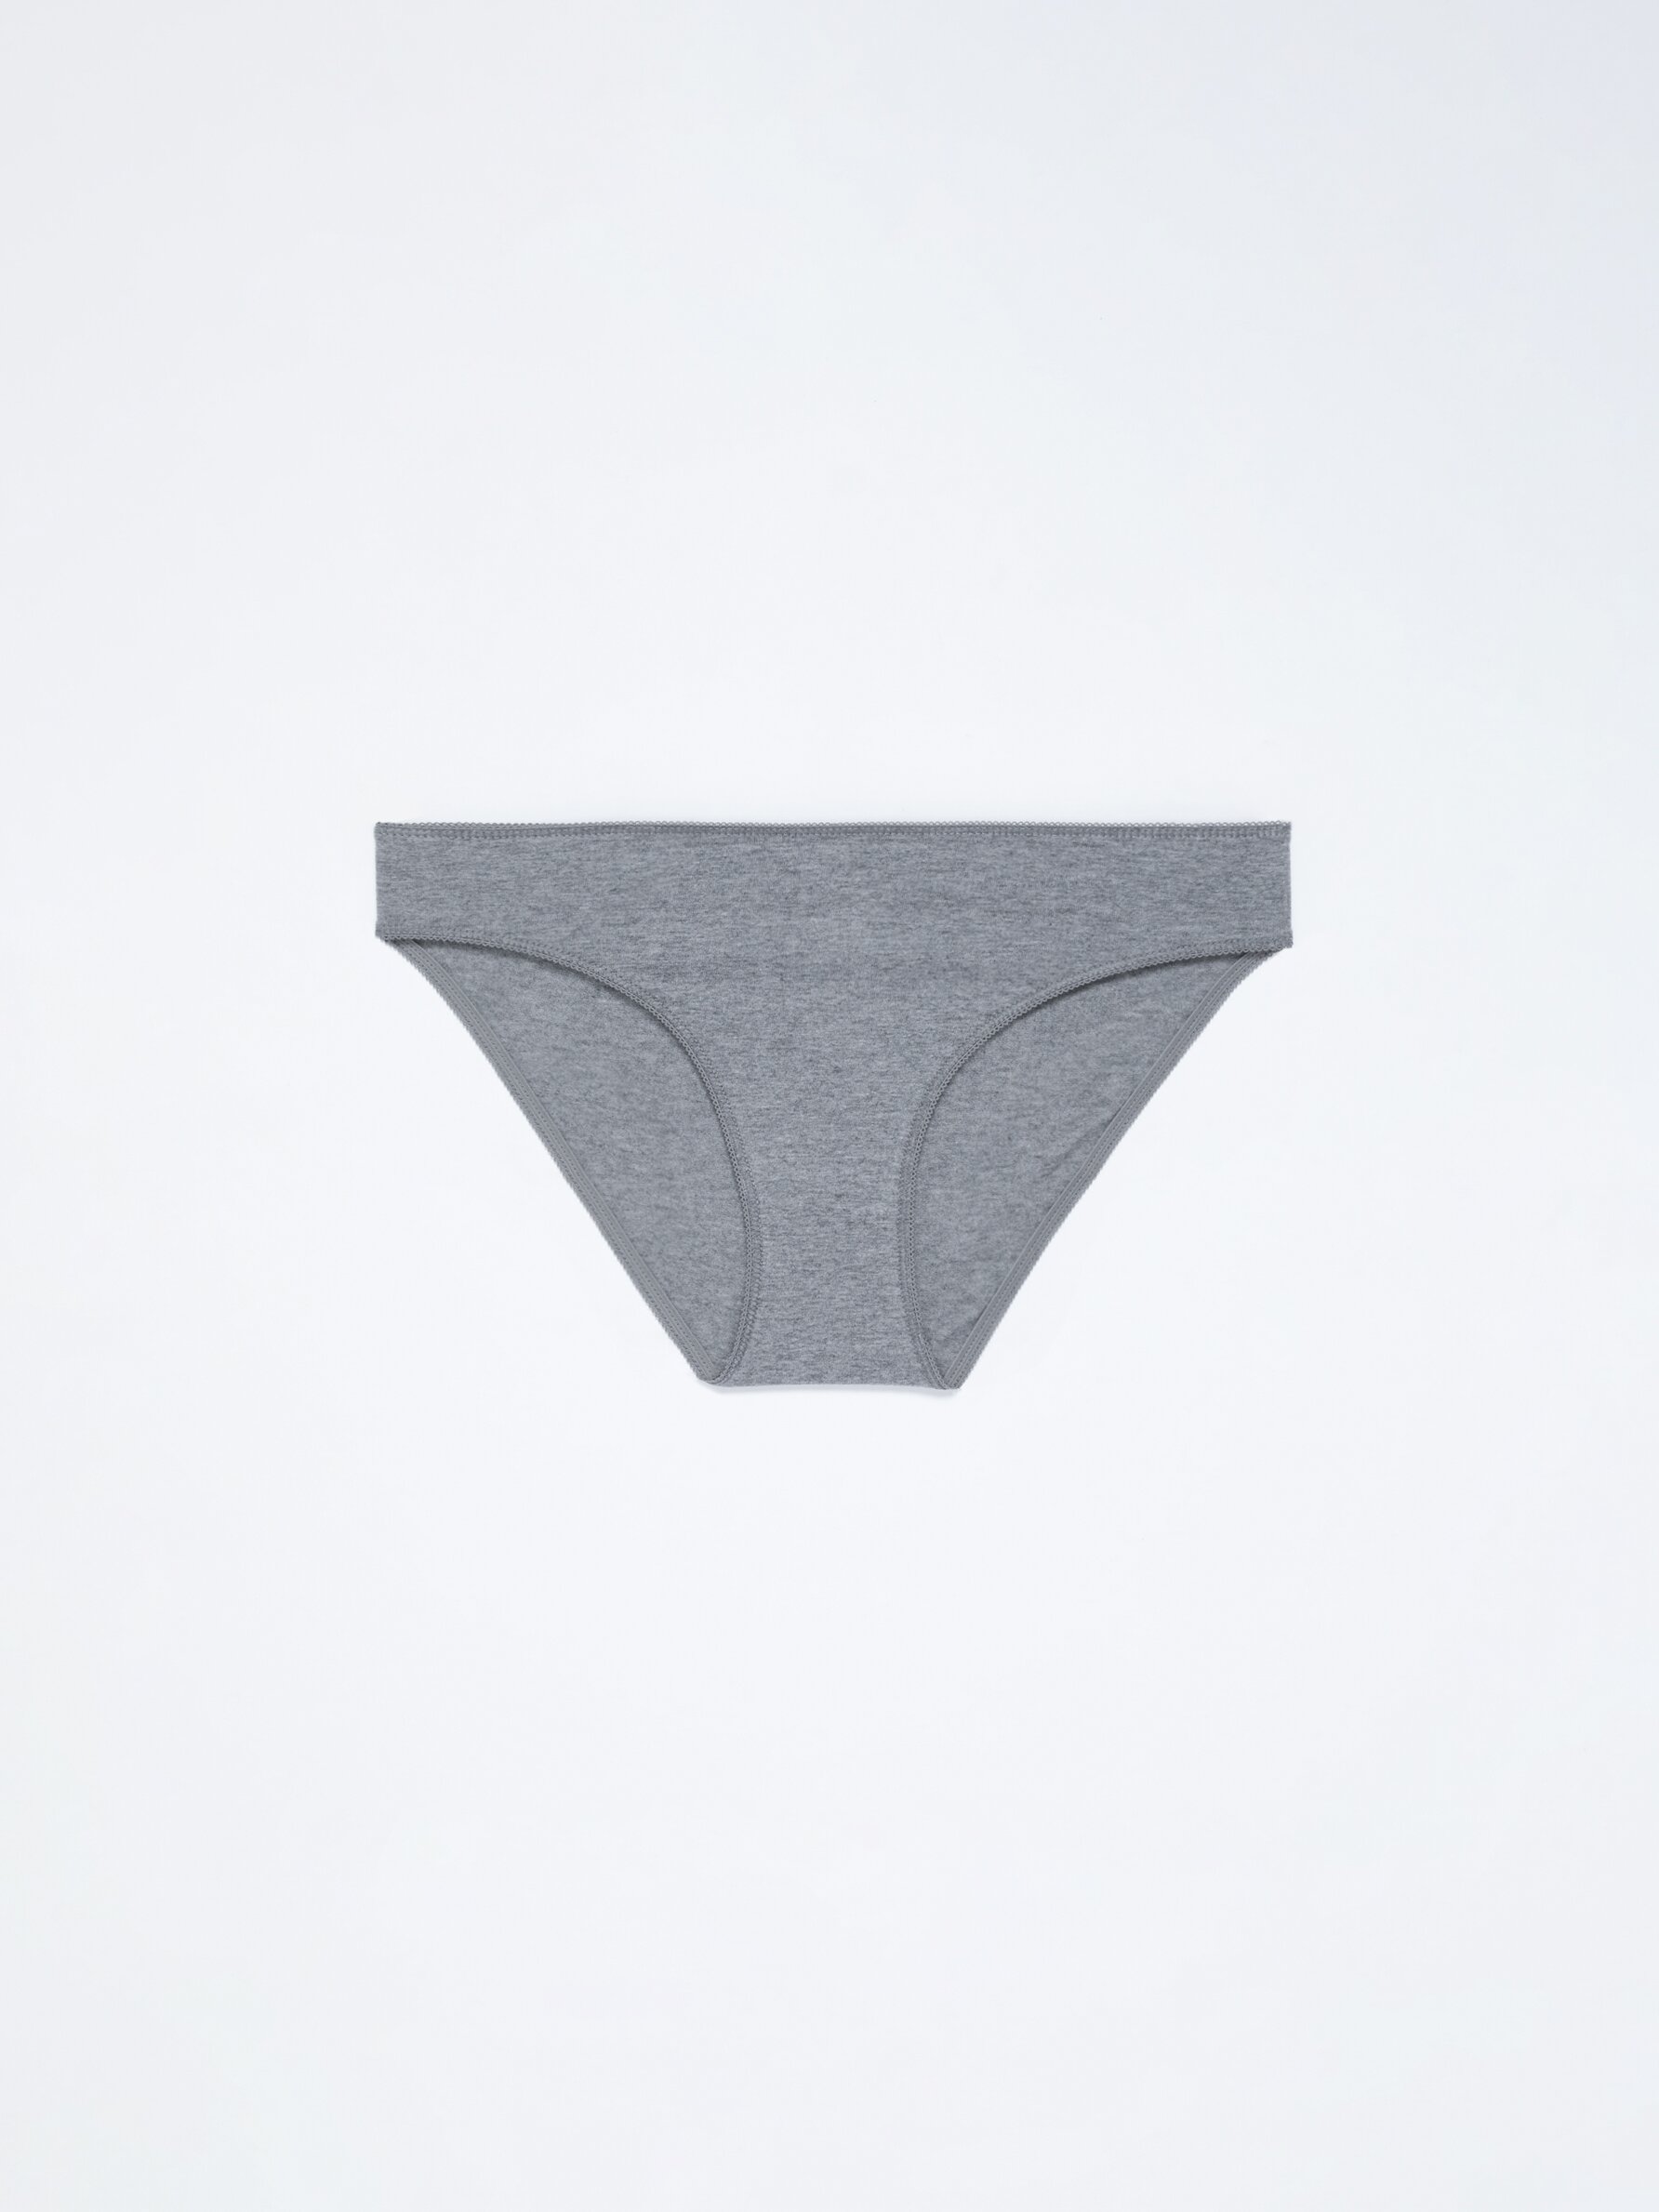 Buy Dkny Underwear in Saudi, UAE, Kuwait and Qatar